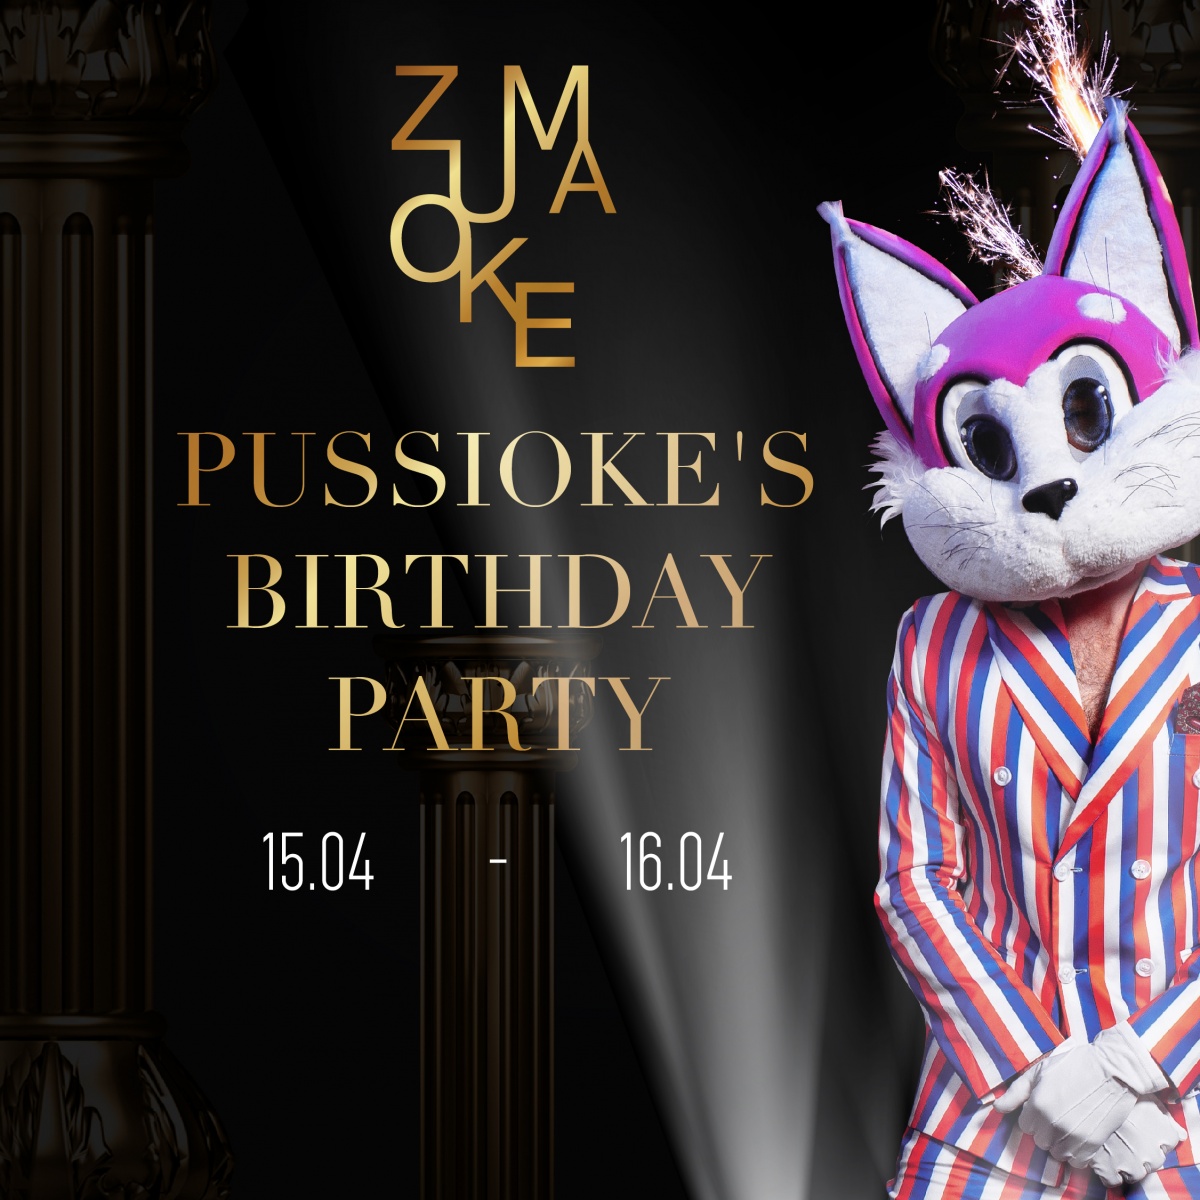 Pussioke’s birthday party 15.04 – 16.04 в ZUMAOKE